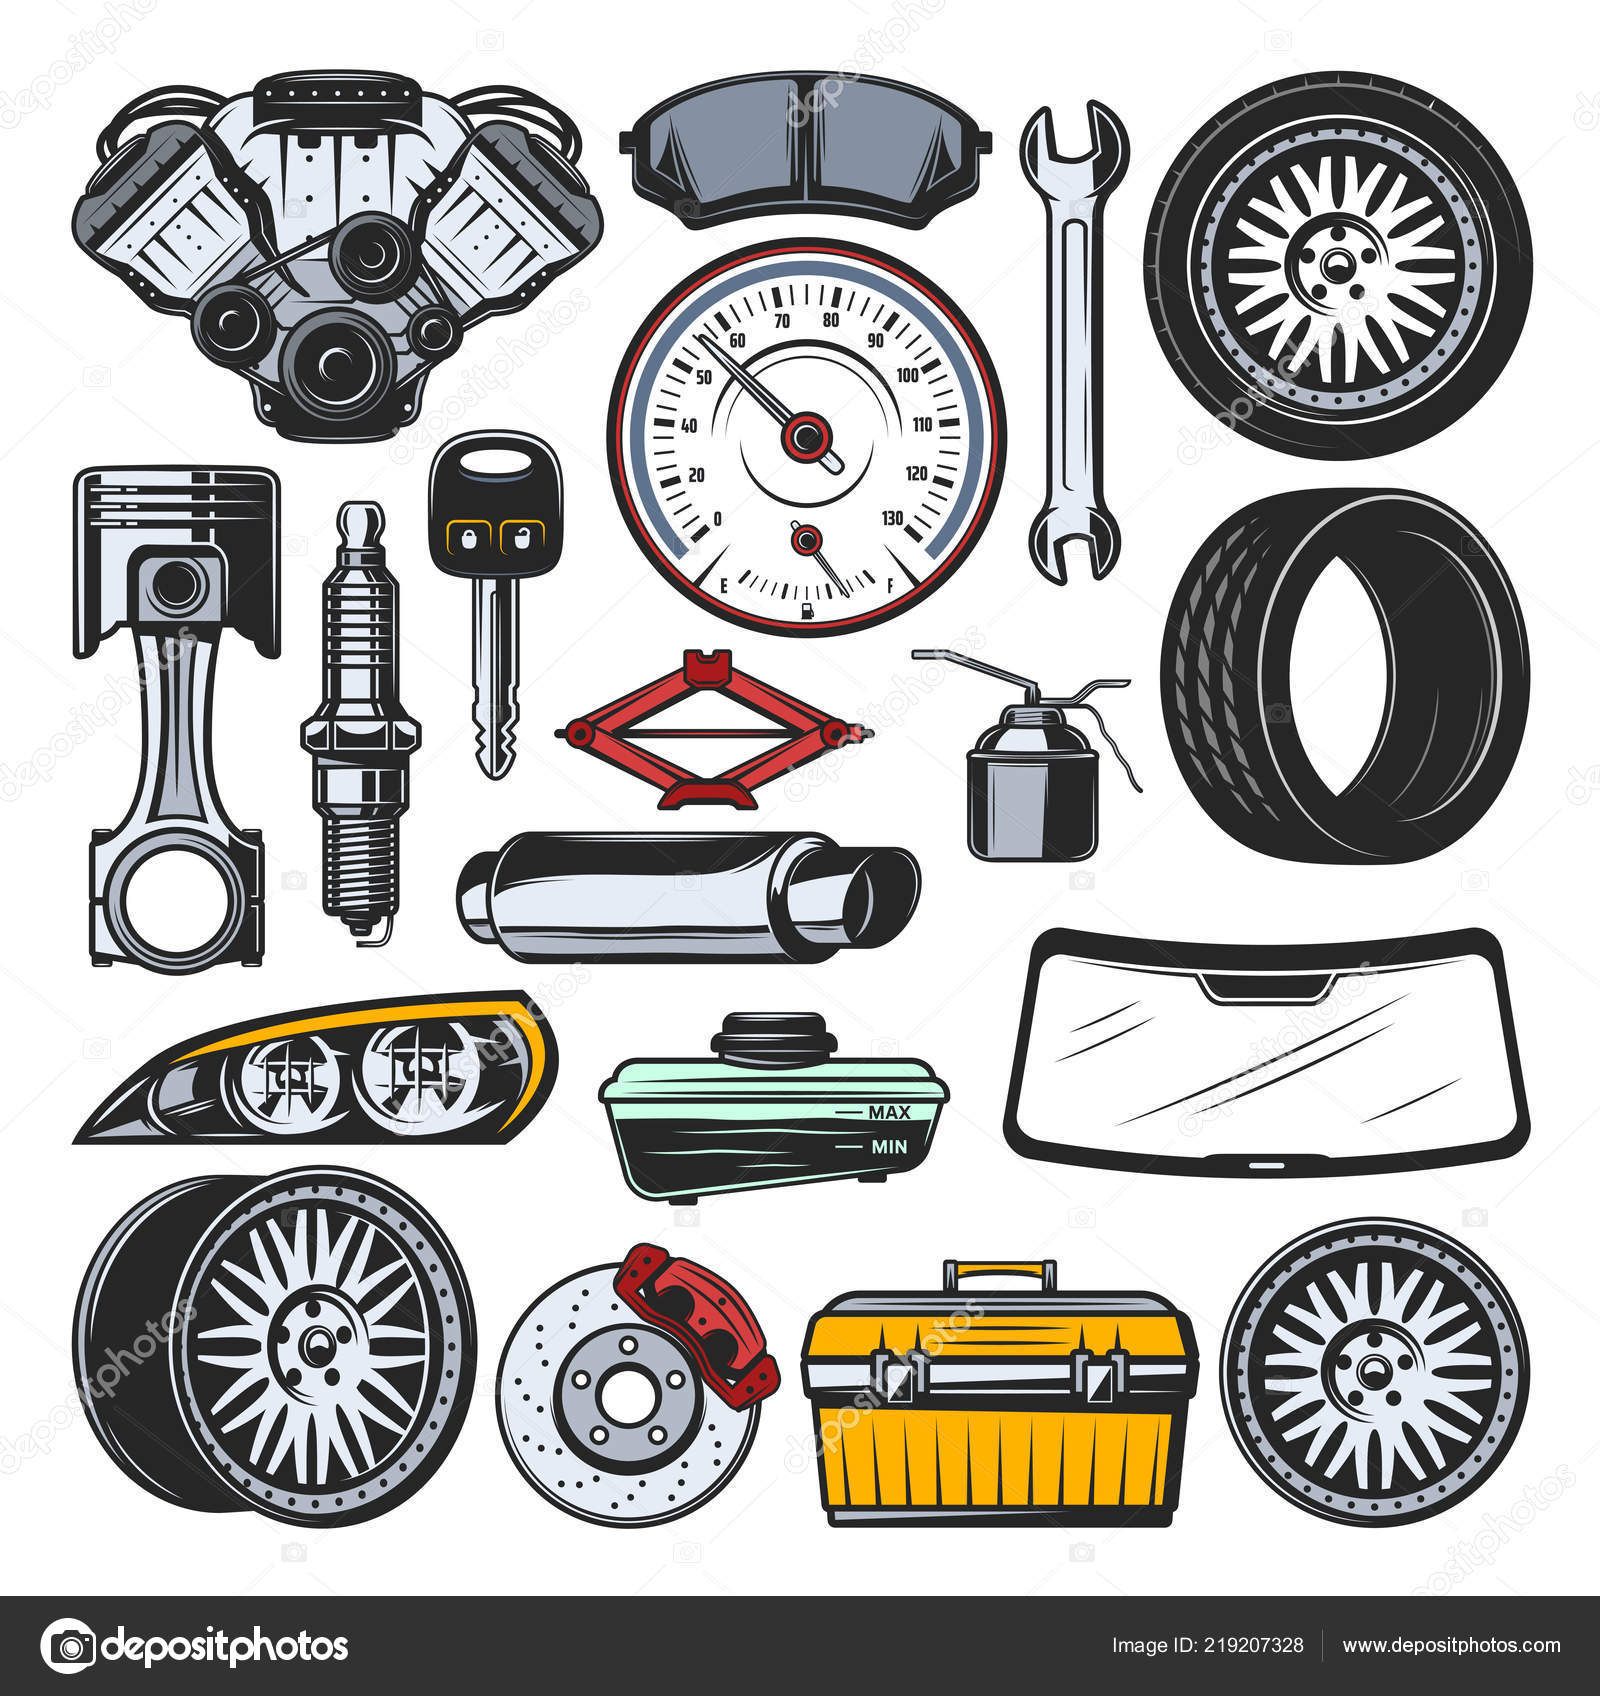 https://st4.depositphotos.com/1020070/21920/v/1600/depositphotos_219207328-stock-illustration-car-auto-parts-icons-tools.jpg